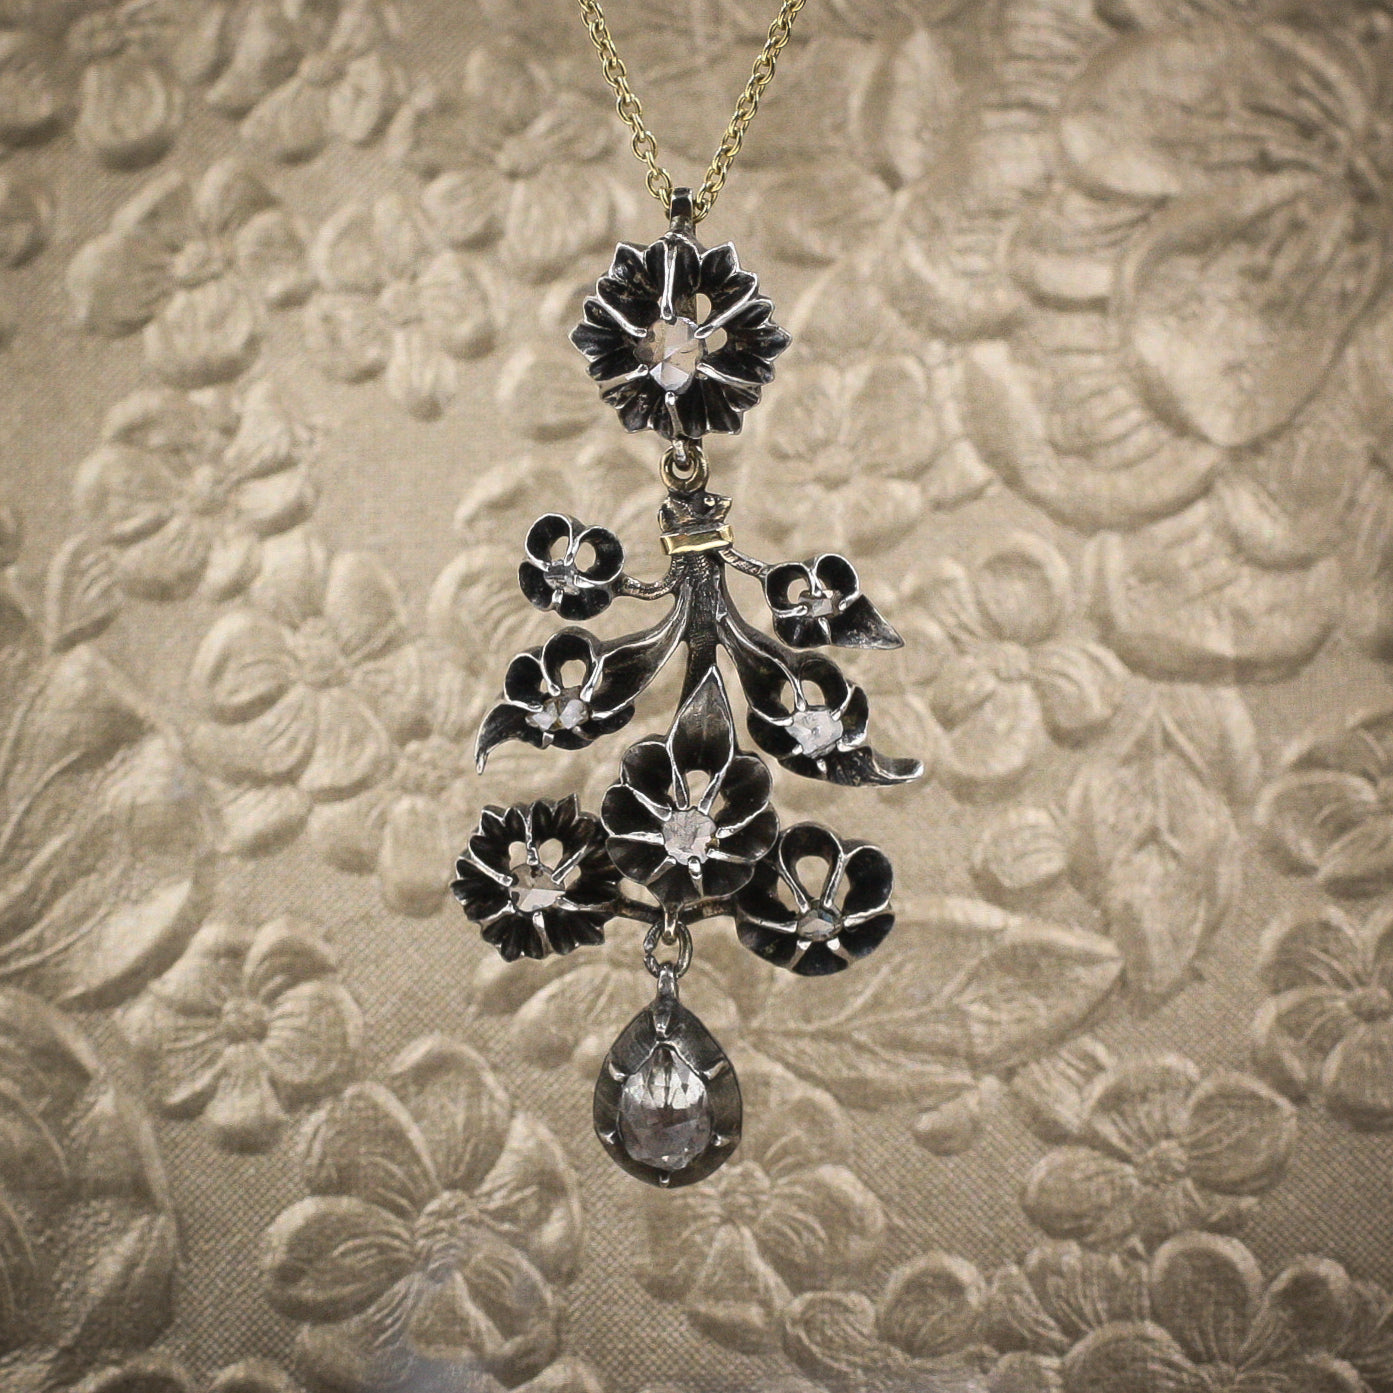 Starry Floral Rose-cut Diamond Pendant c1850